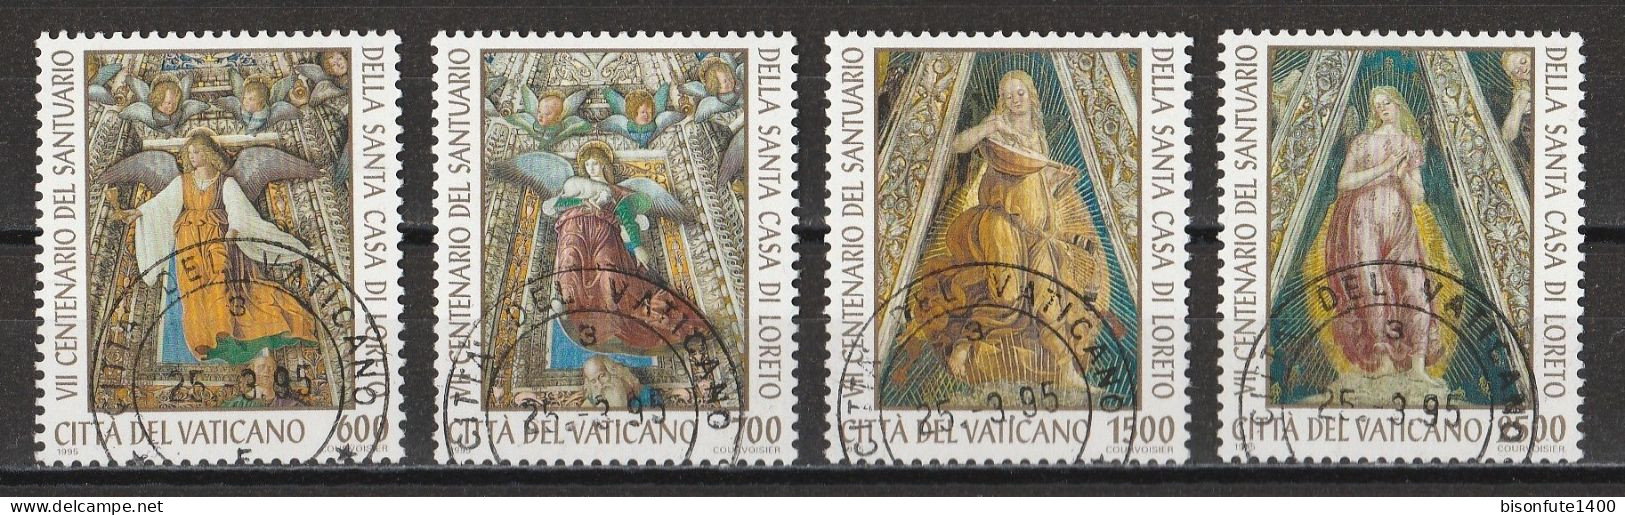 Vatican 1995 : Timbres Yvert & Tellier N° 1000 - 1001 - 1002 Et 1003 Oblitérés - Usati